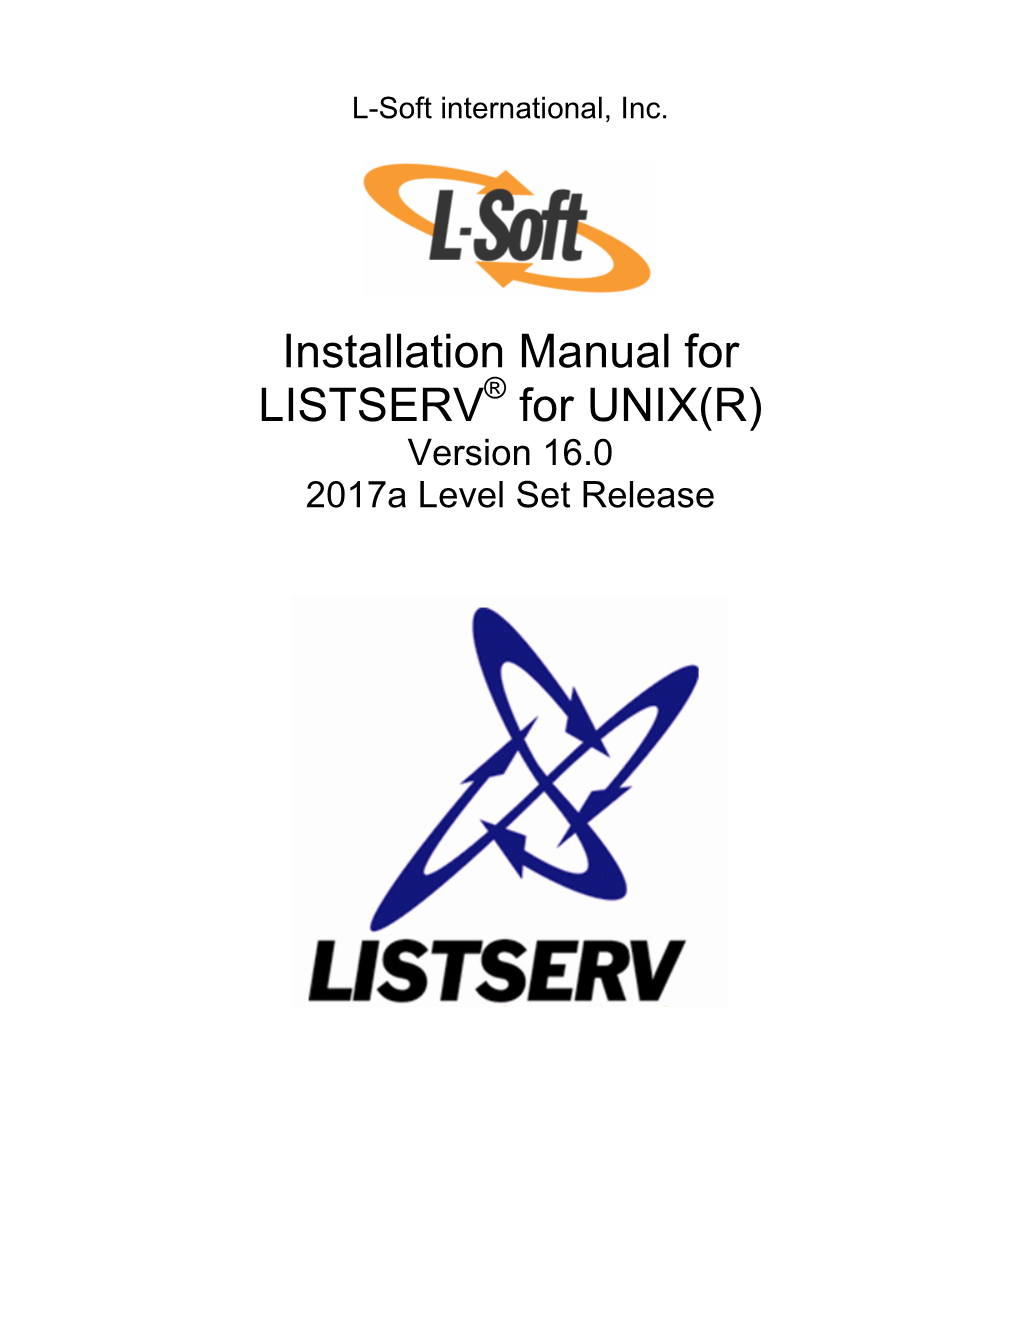 Installation Manual for LISTSERV for Unix 16.0-2017A